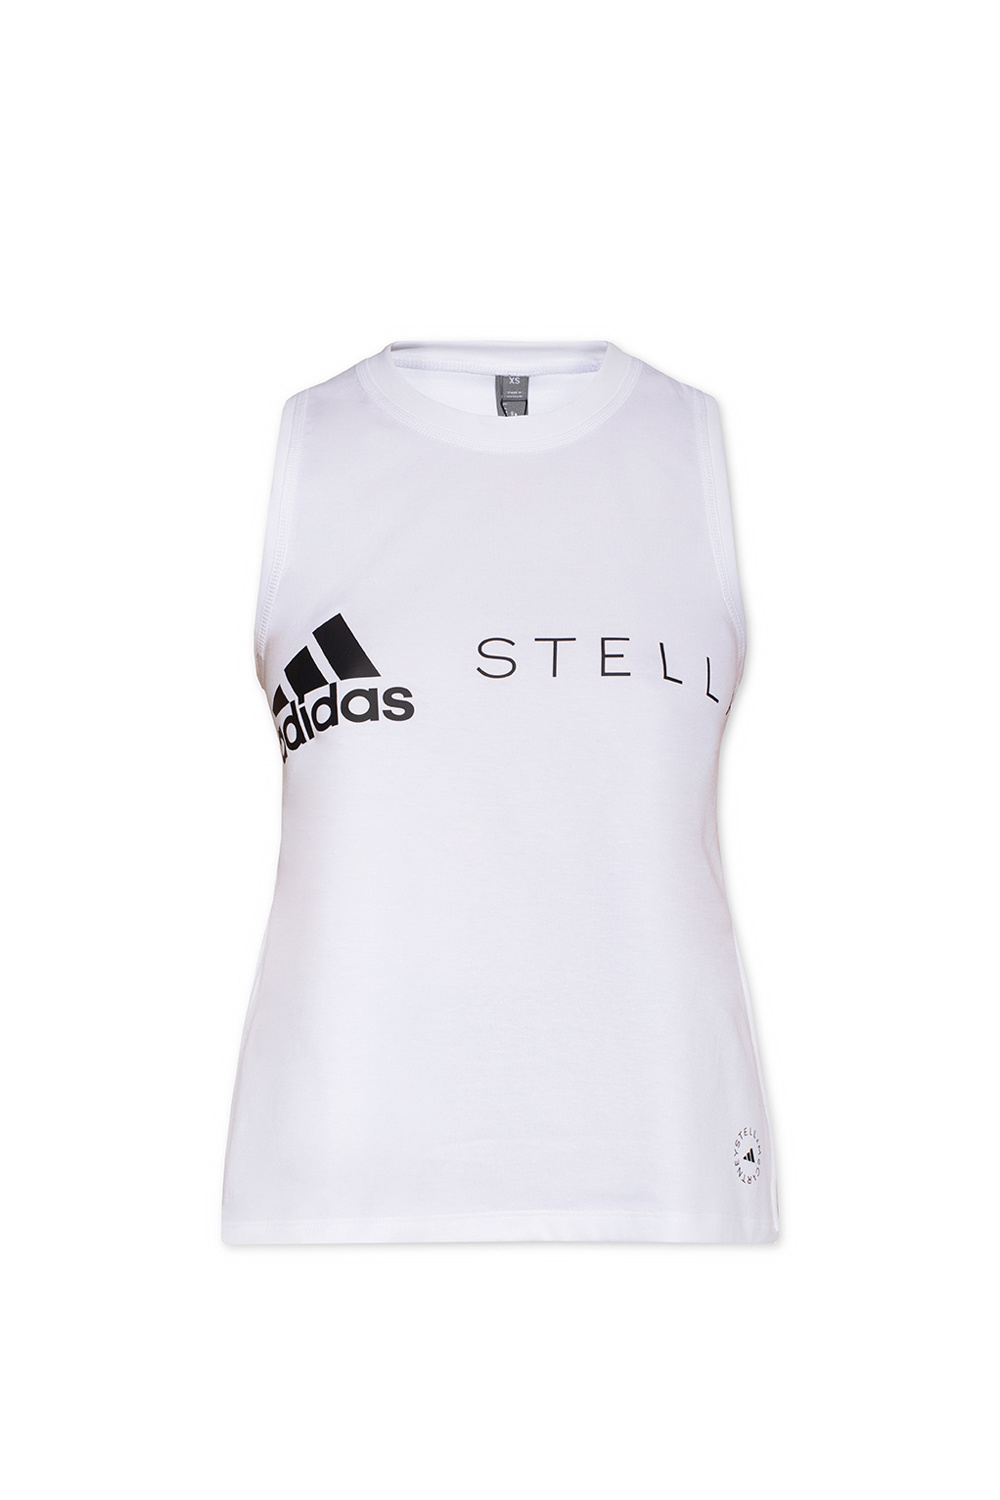 adidas by Stella McCartney Logo Tee - White, Women's Training